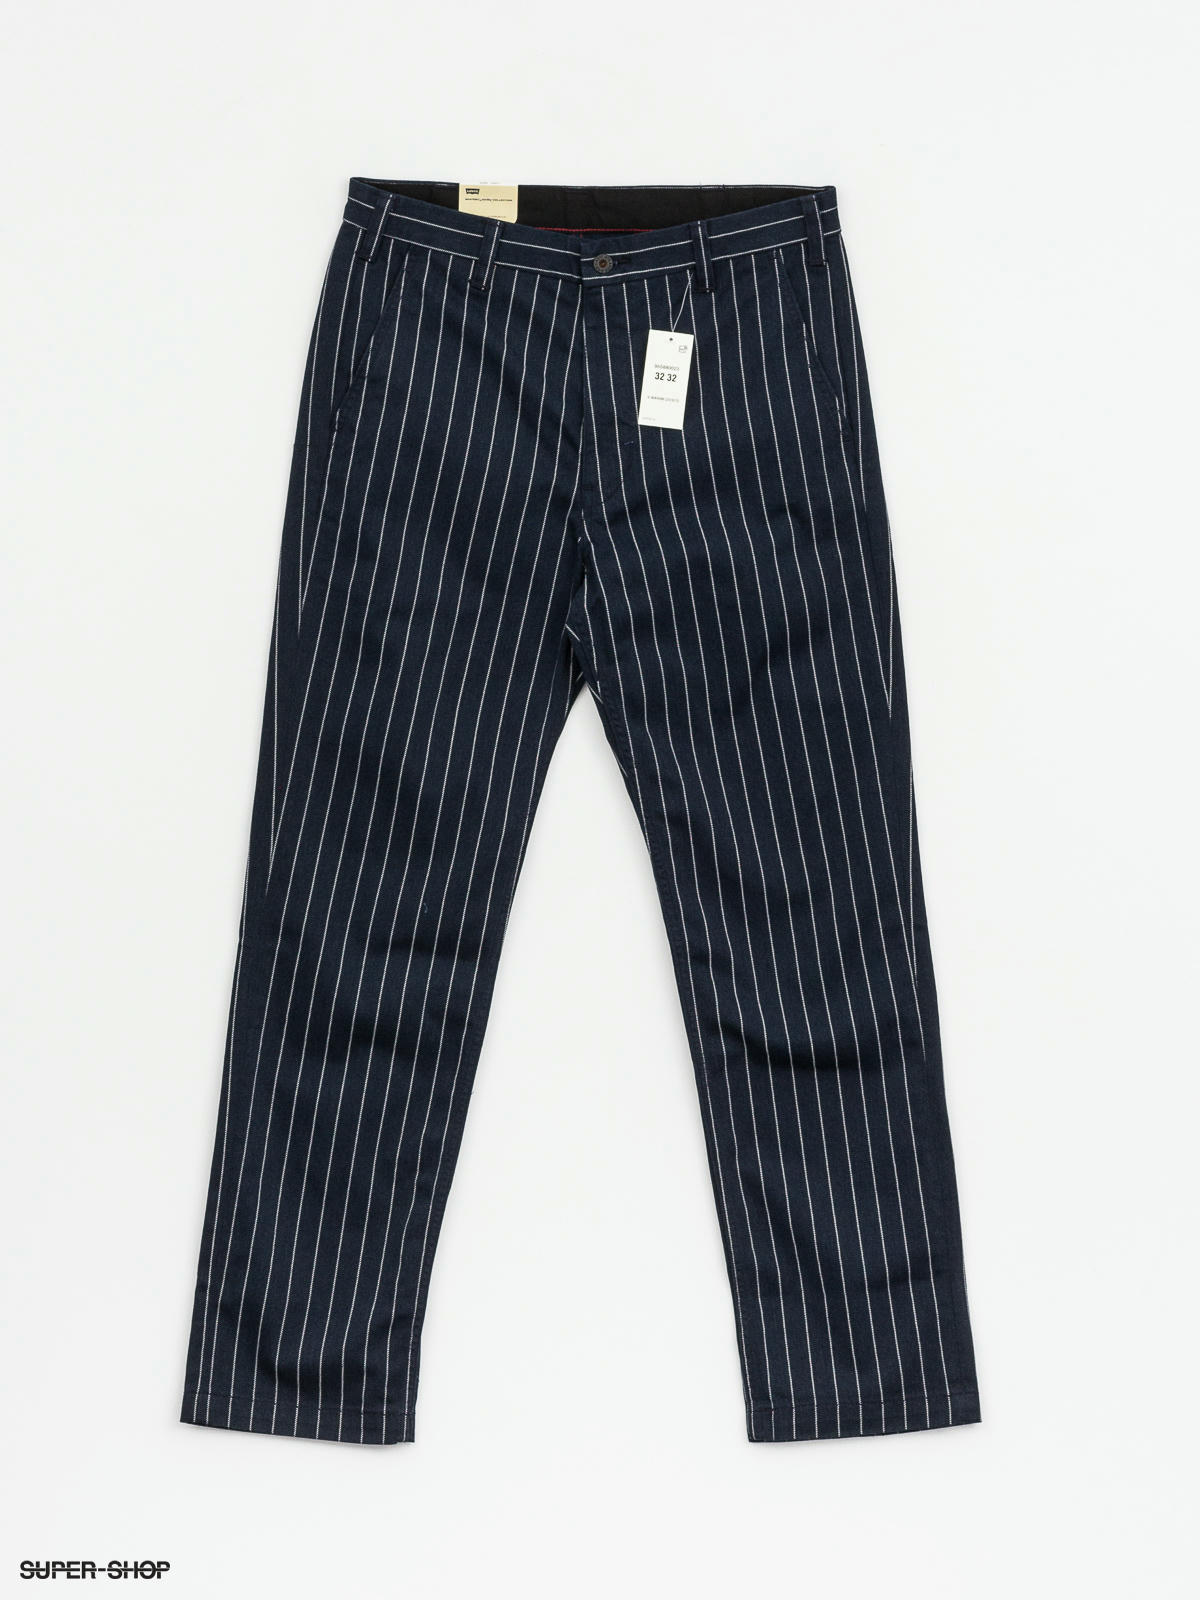 Levi's Pants Work Pant (pin stripe)